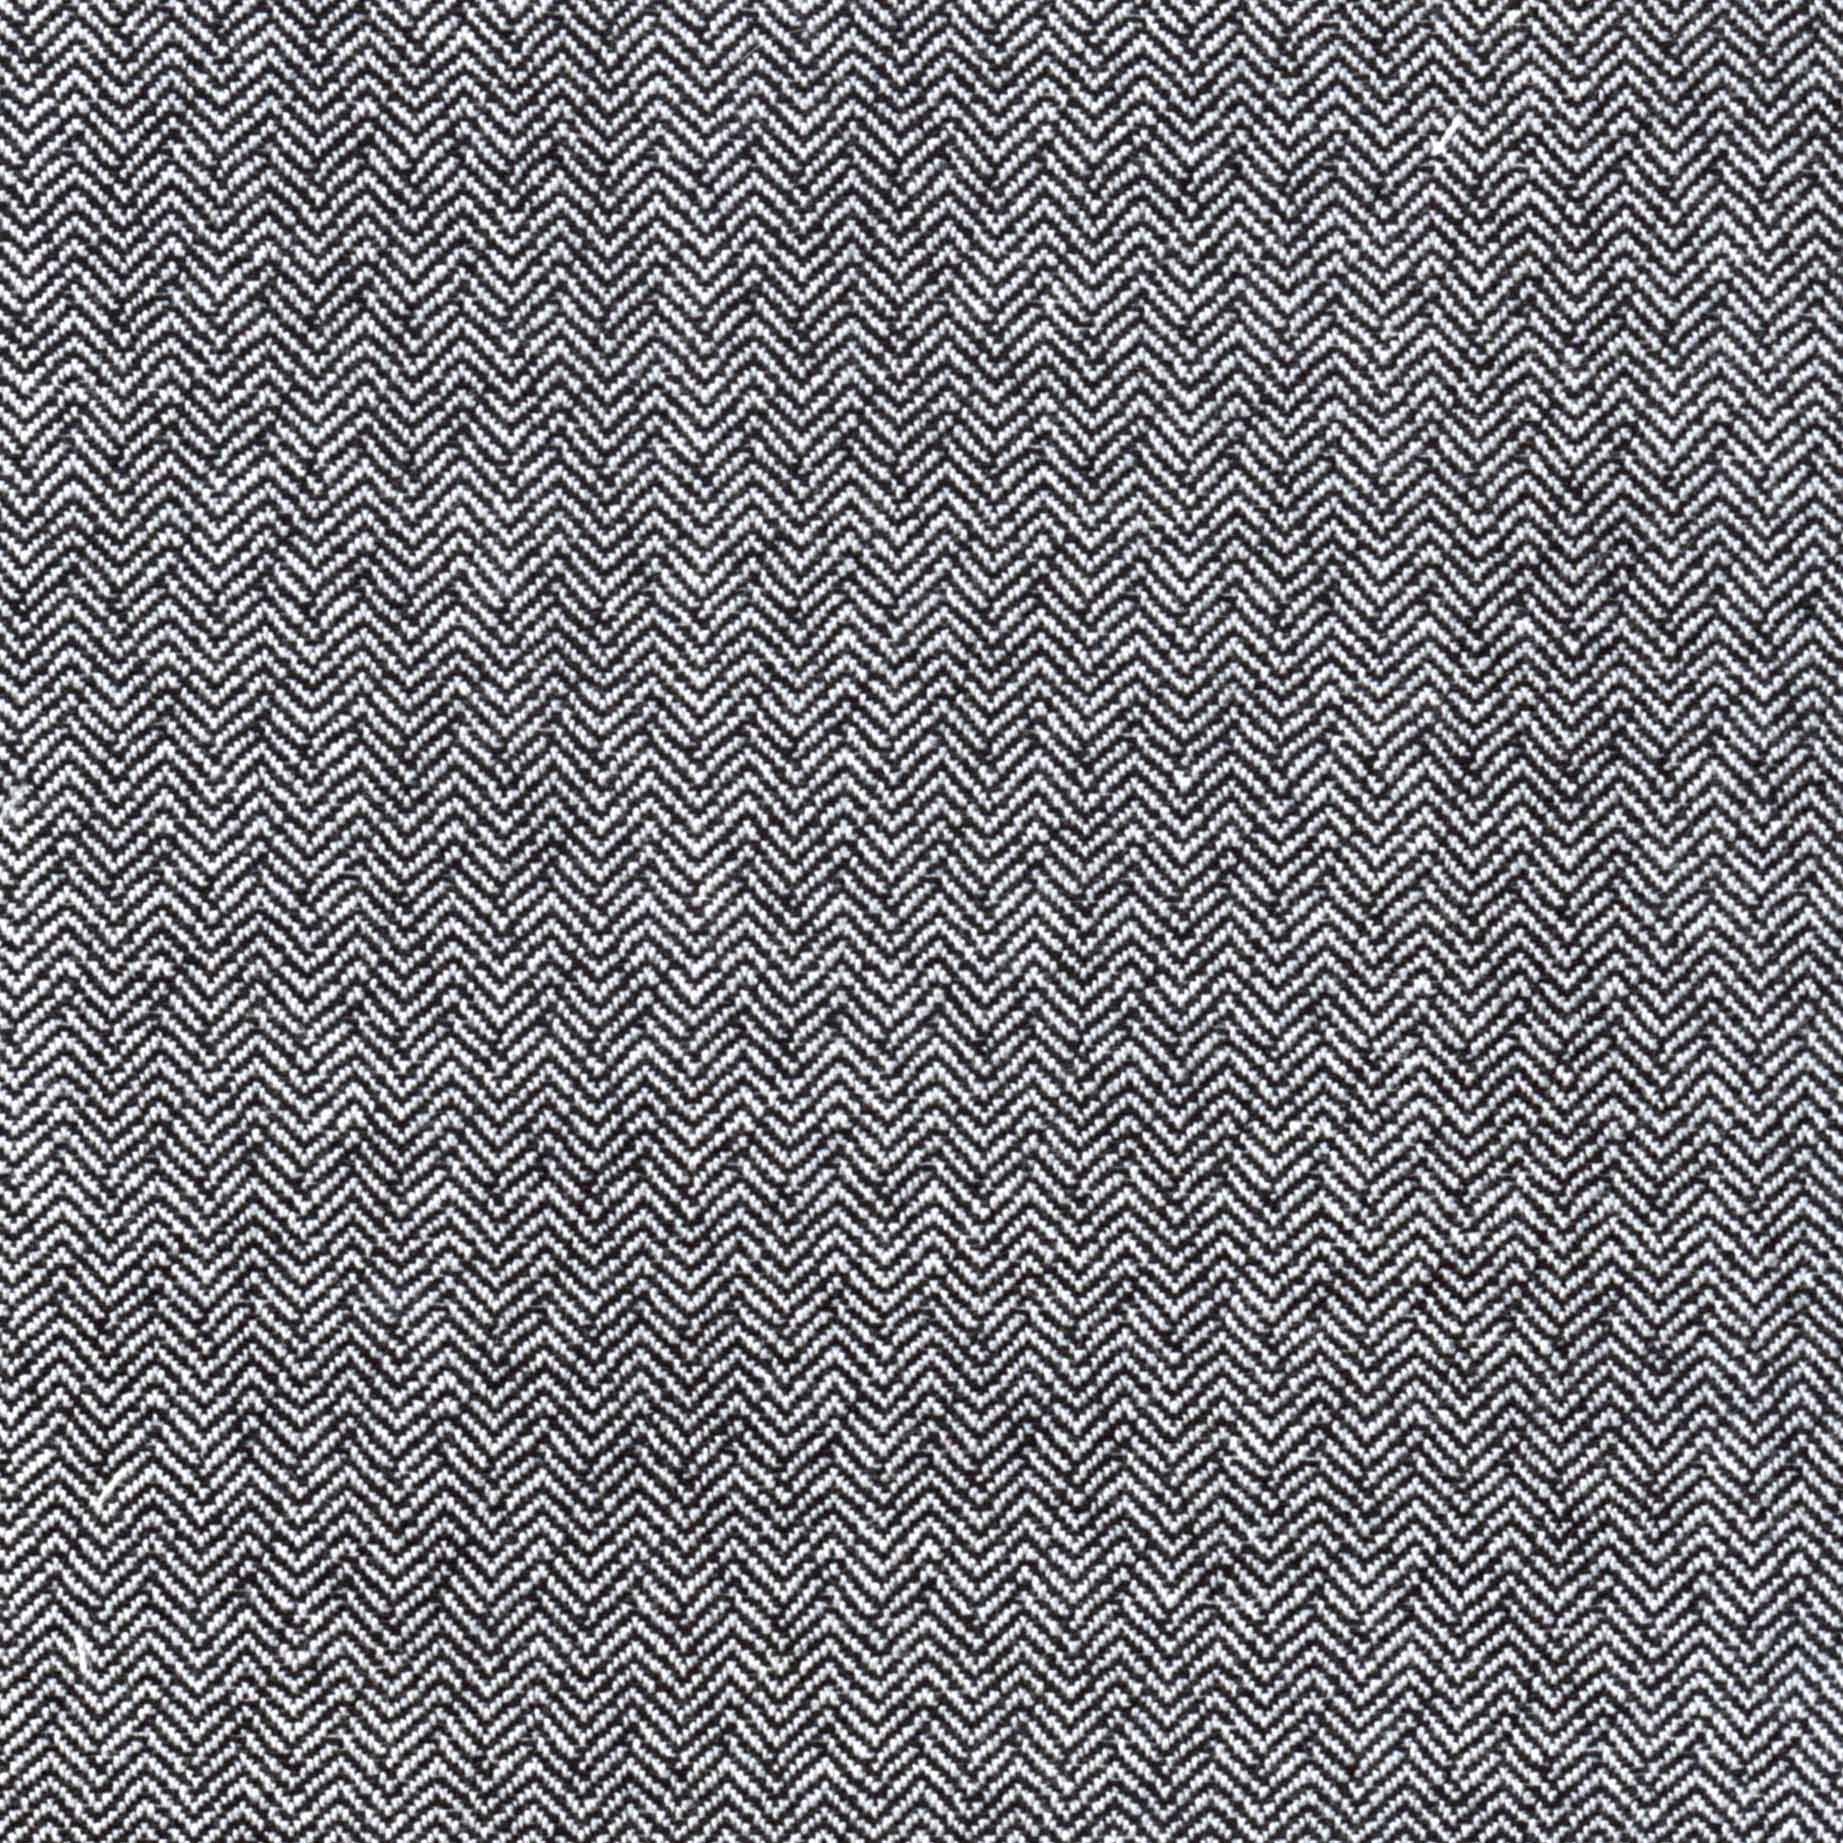 Abstract Herringbone - Dashing Tweeds